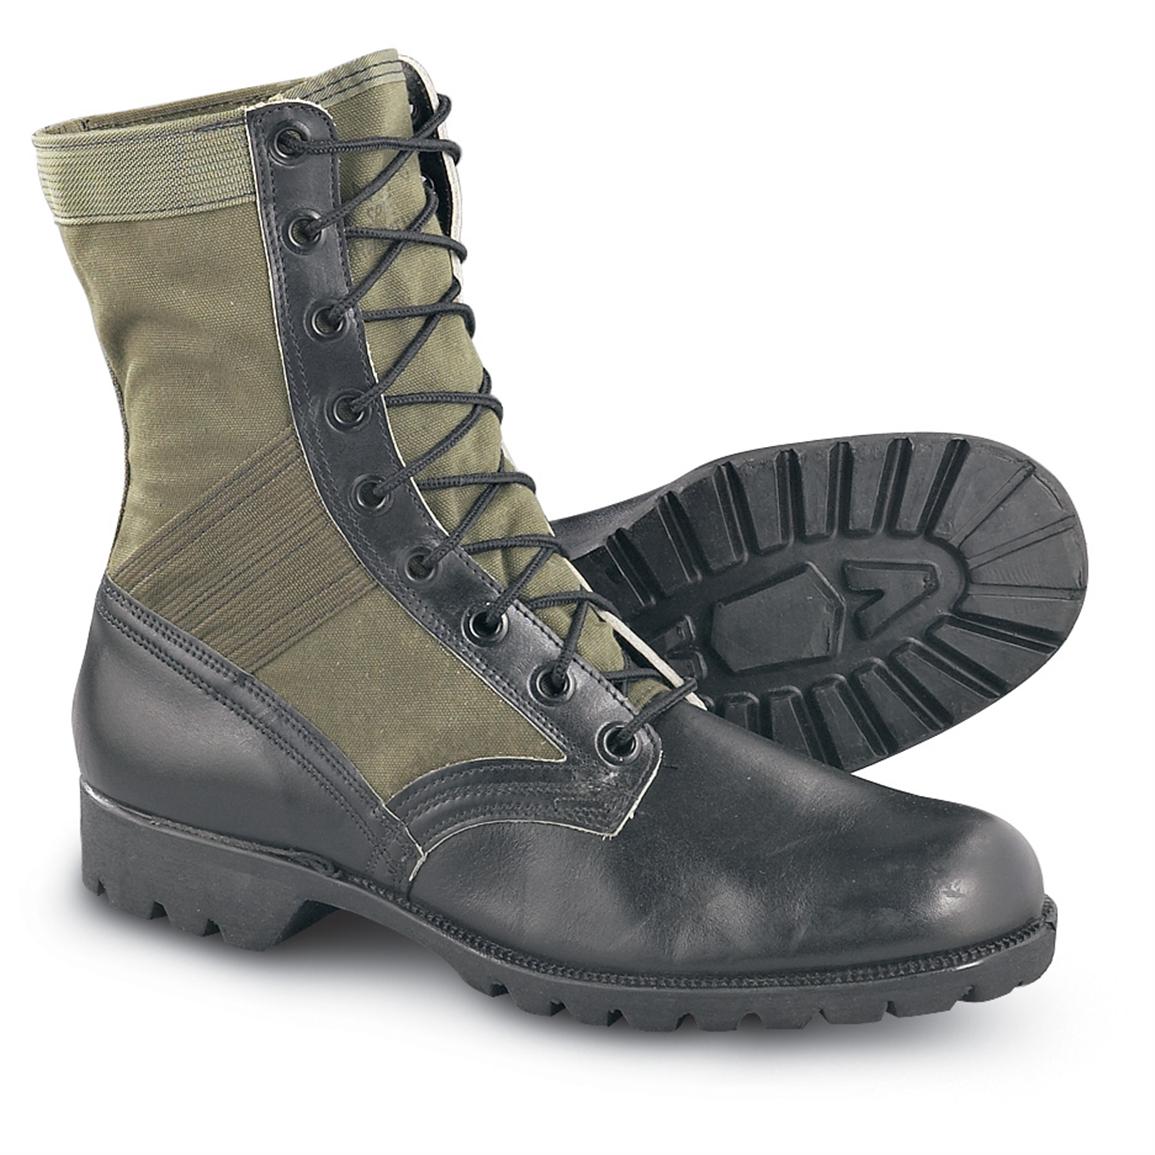 New U.S. Military Vietnamera Jungle Boots 111035, at Sportsman's Guide